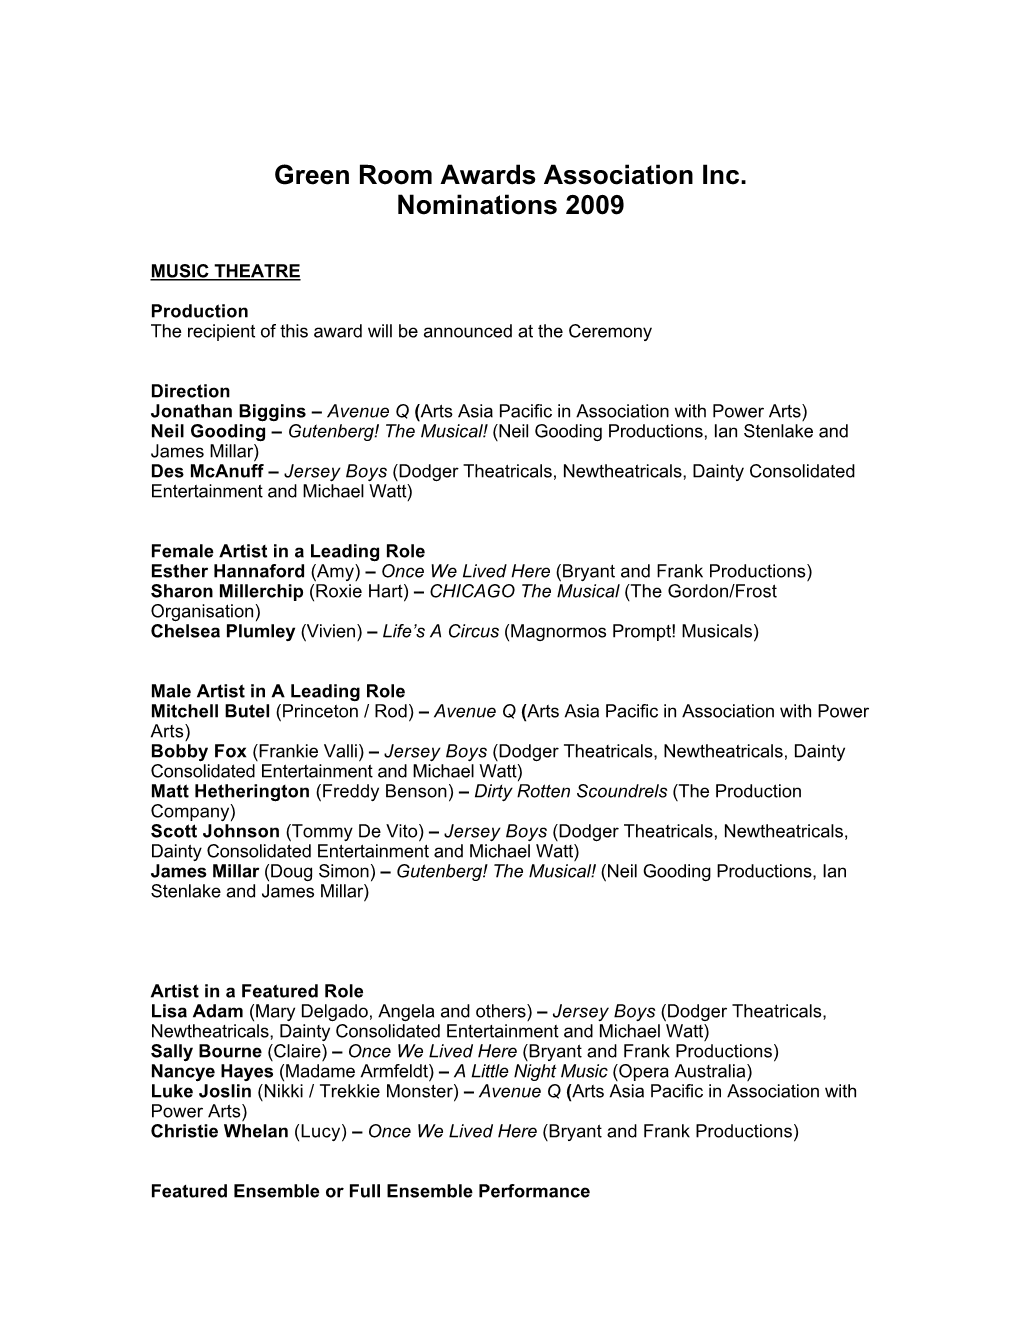 Green Room Nominations 2010